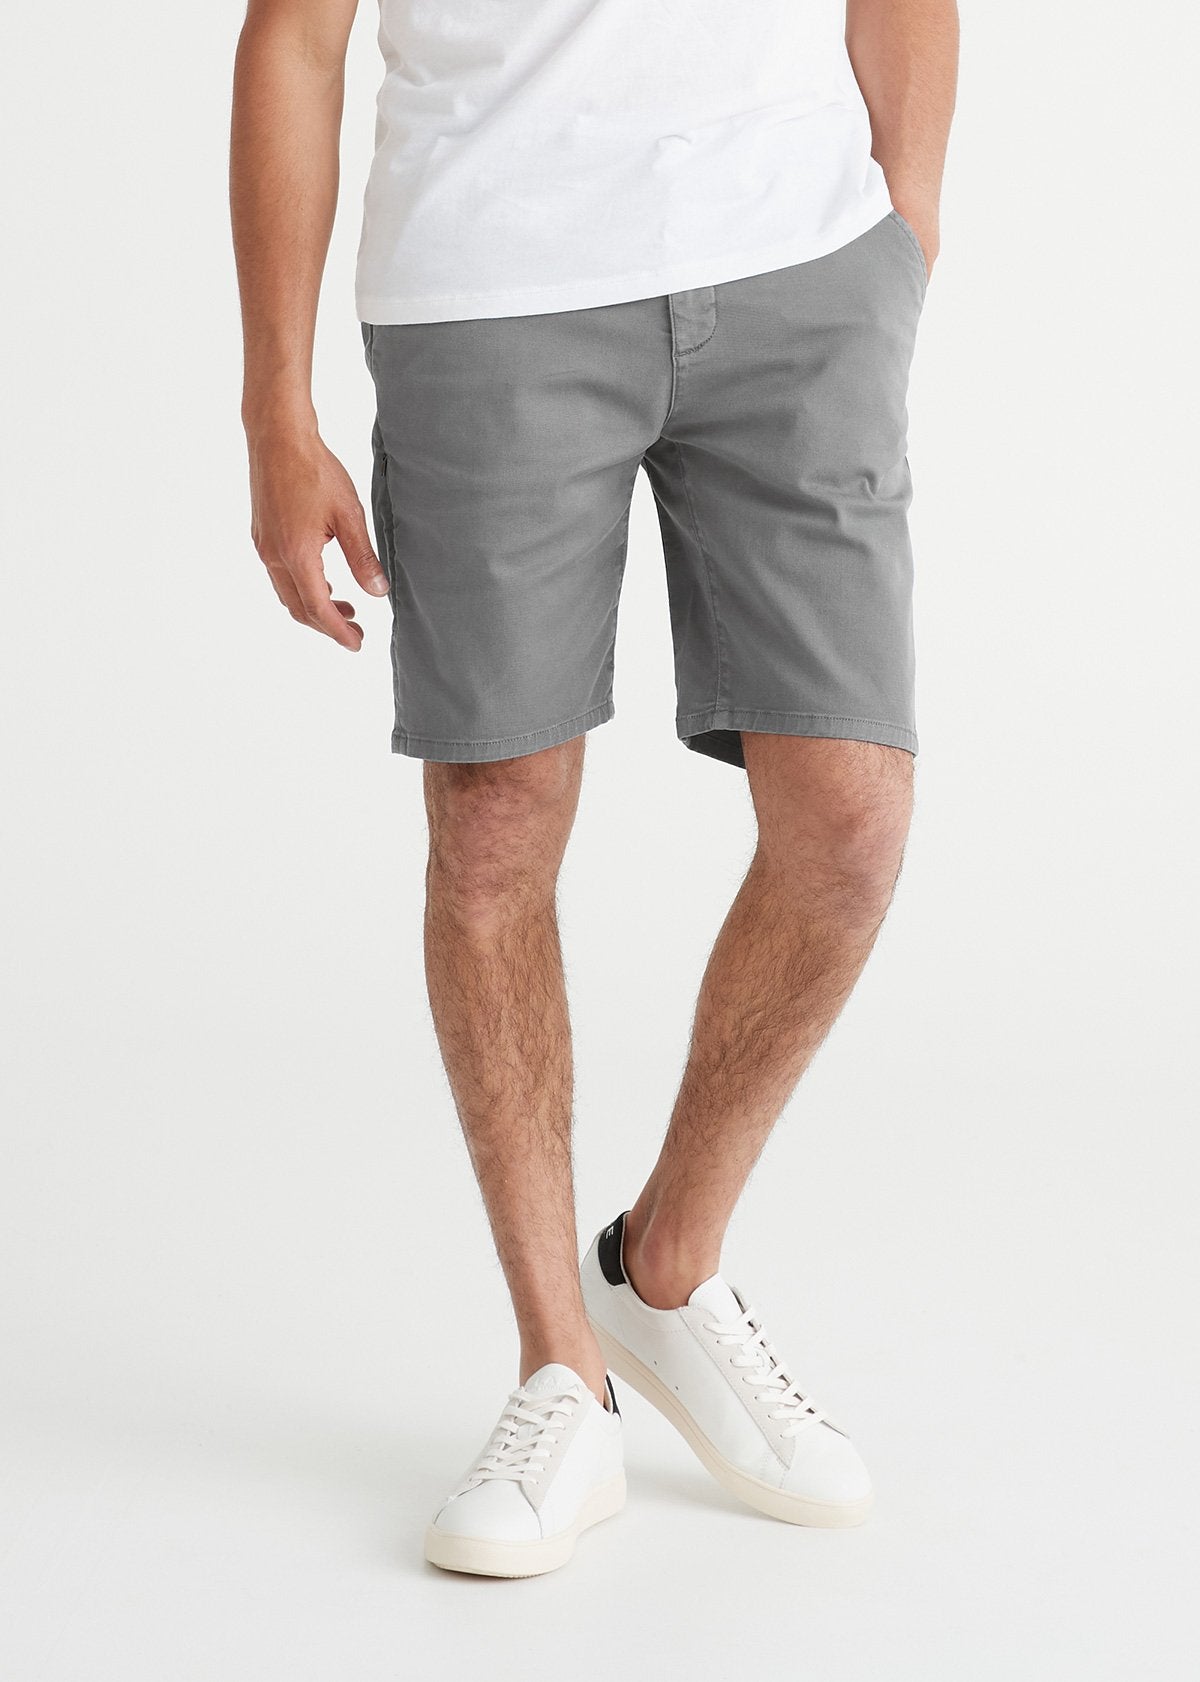 mens lightweight light grey shorts front